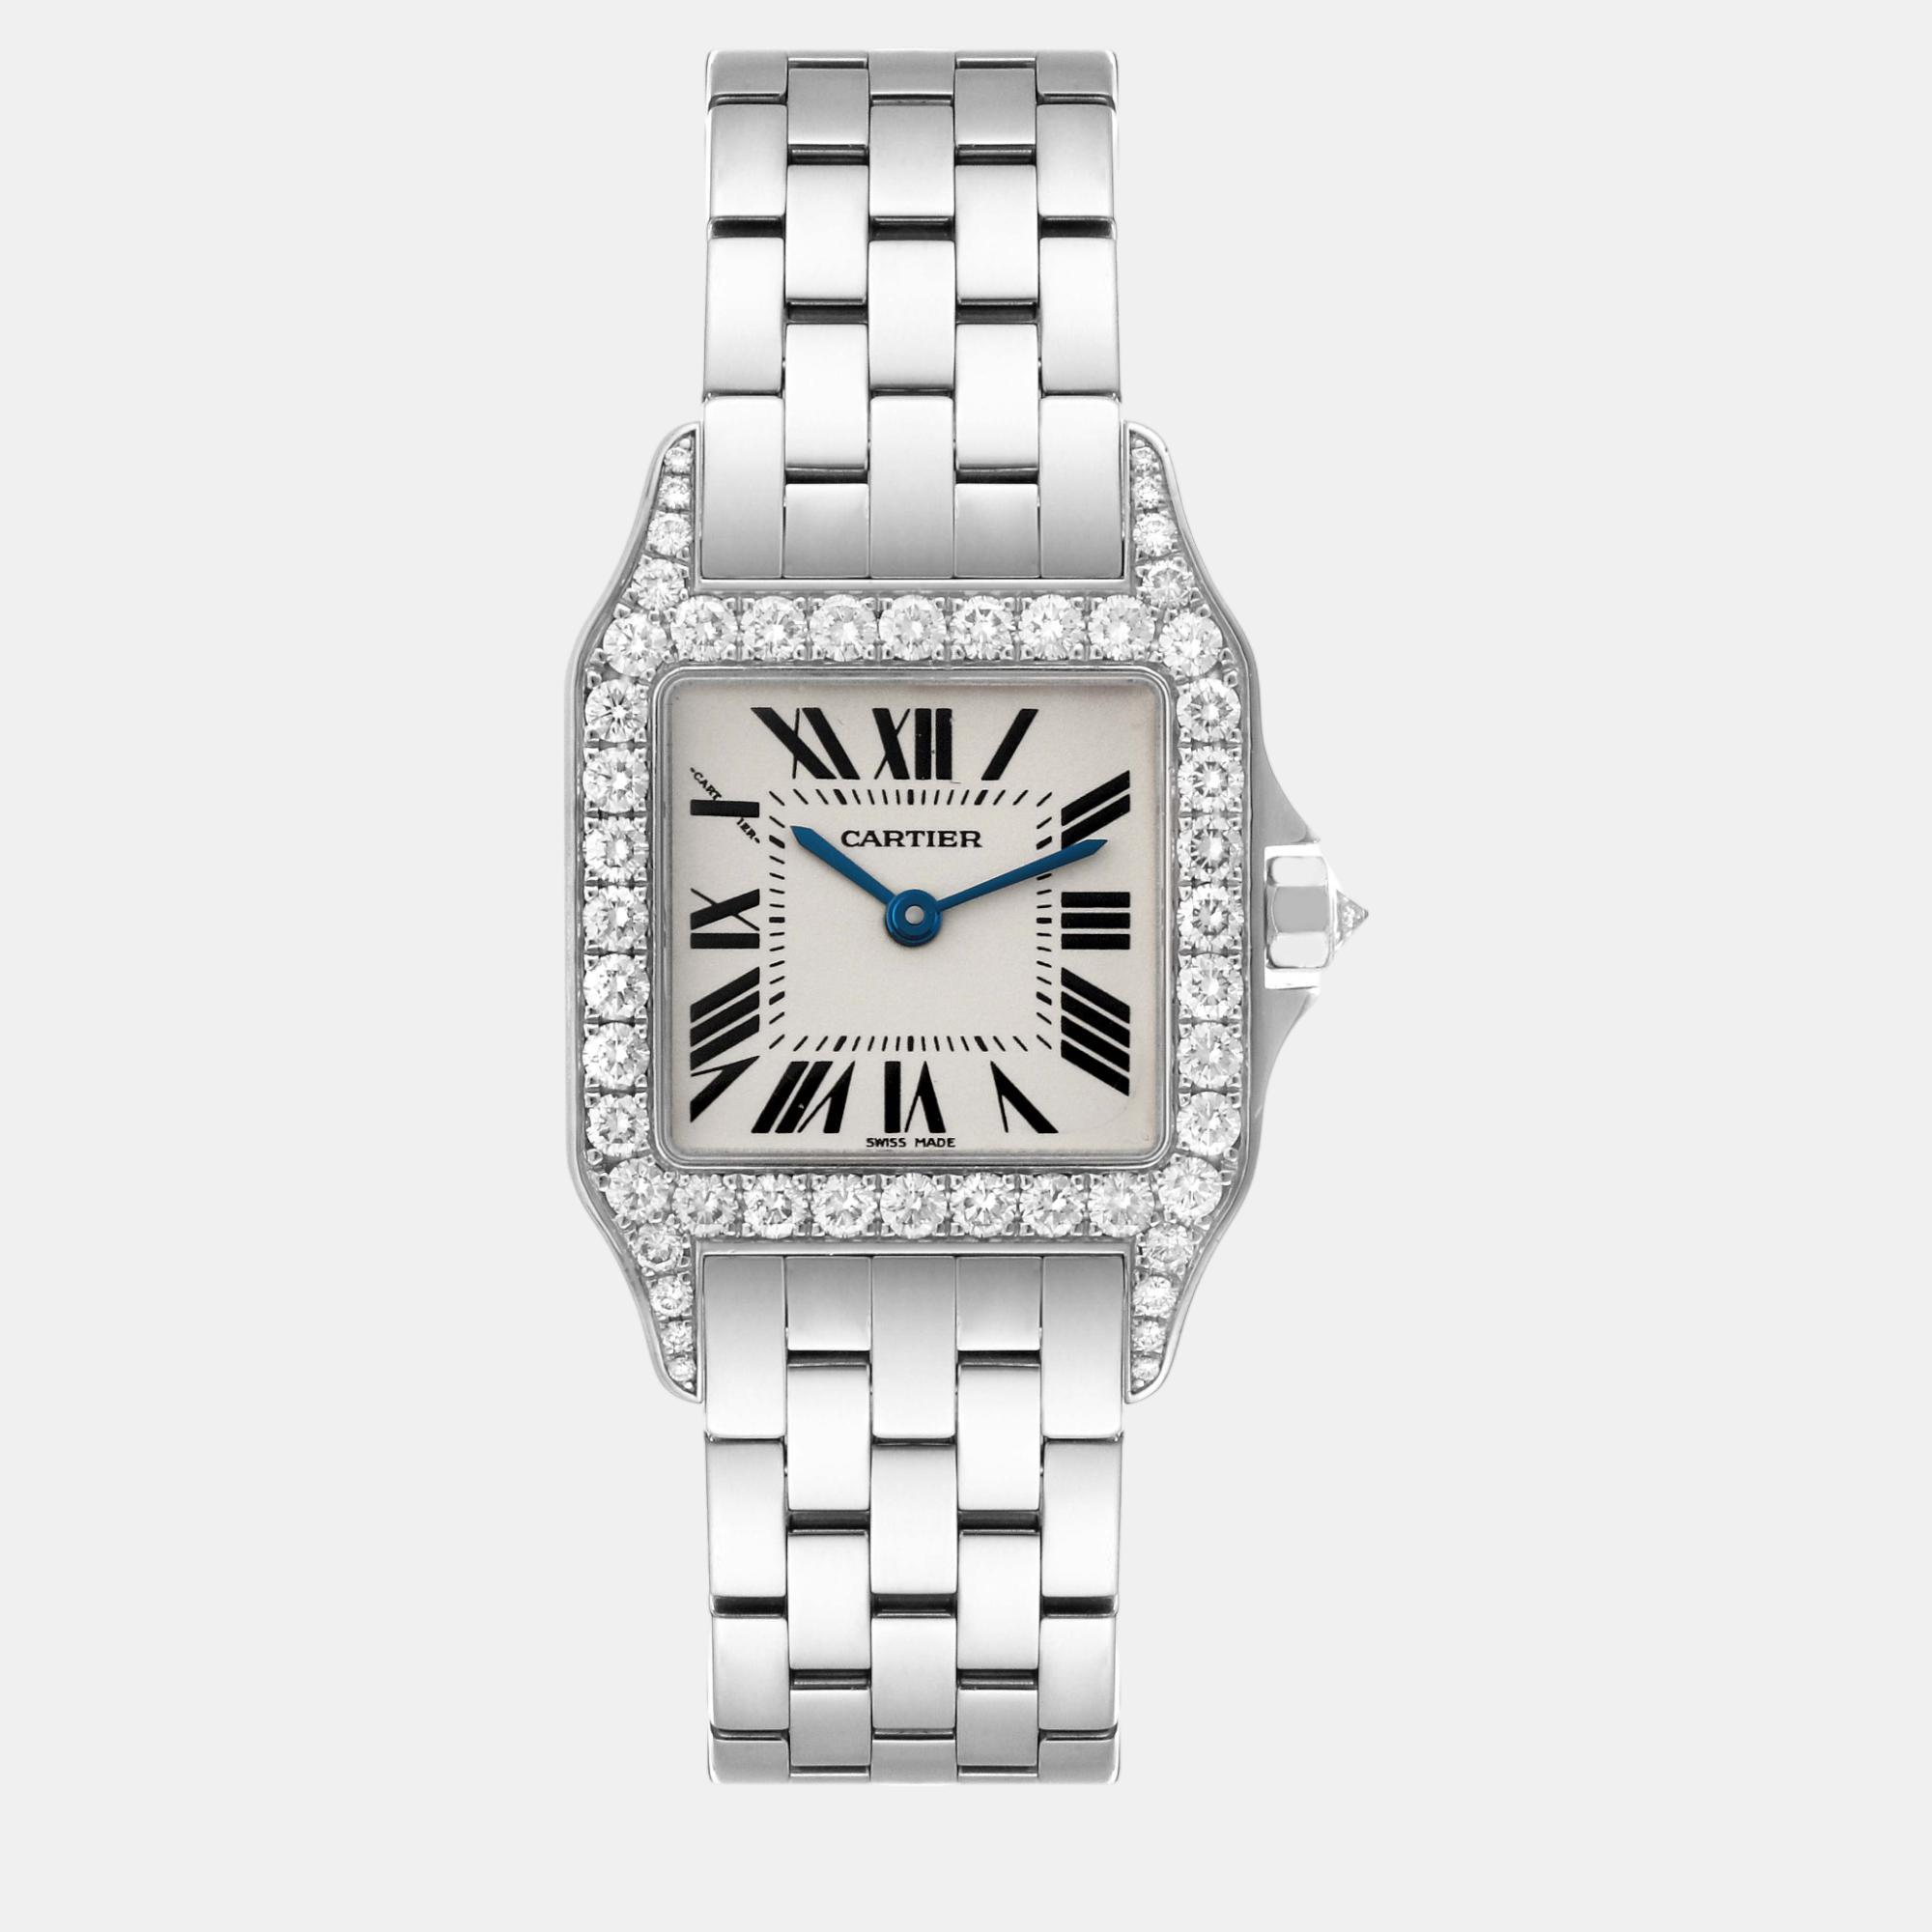 Cartier santos demoiselle midsize white gold diamond ladies watch wf9004y8